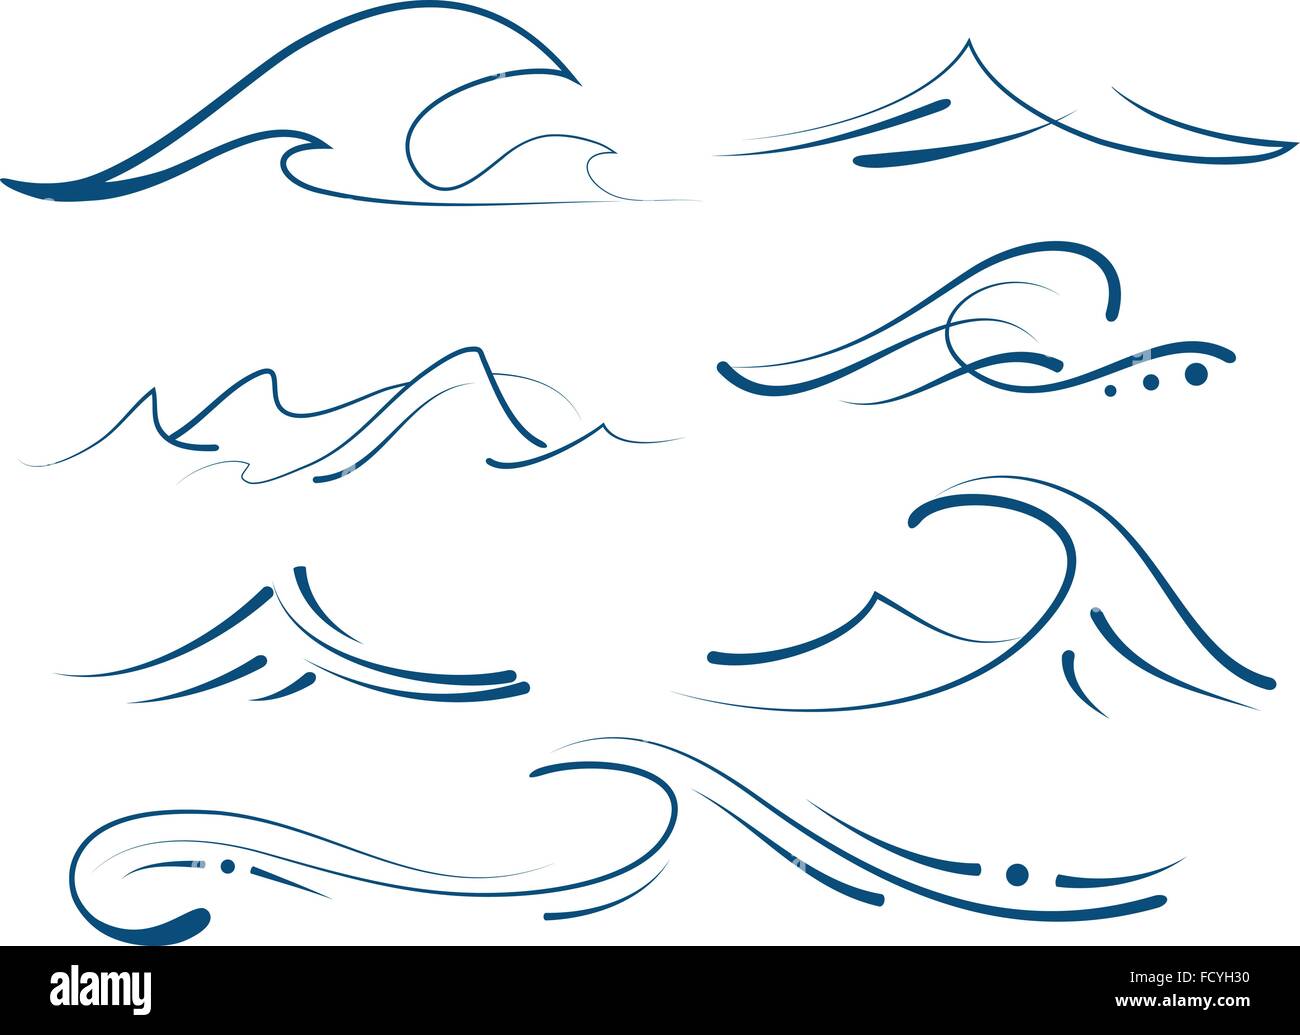 Ocean surface wave design illustration drawing